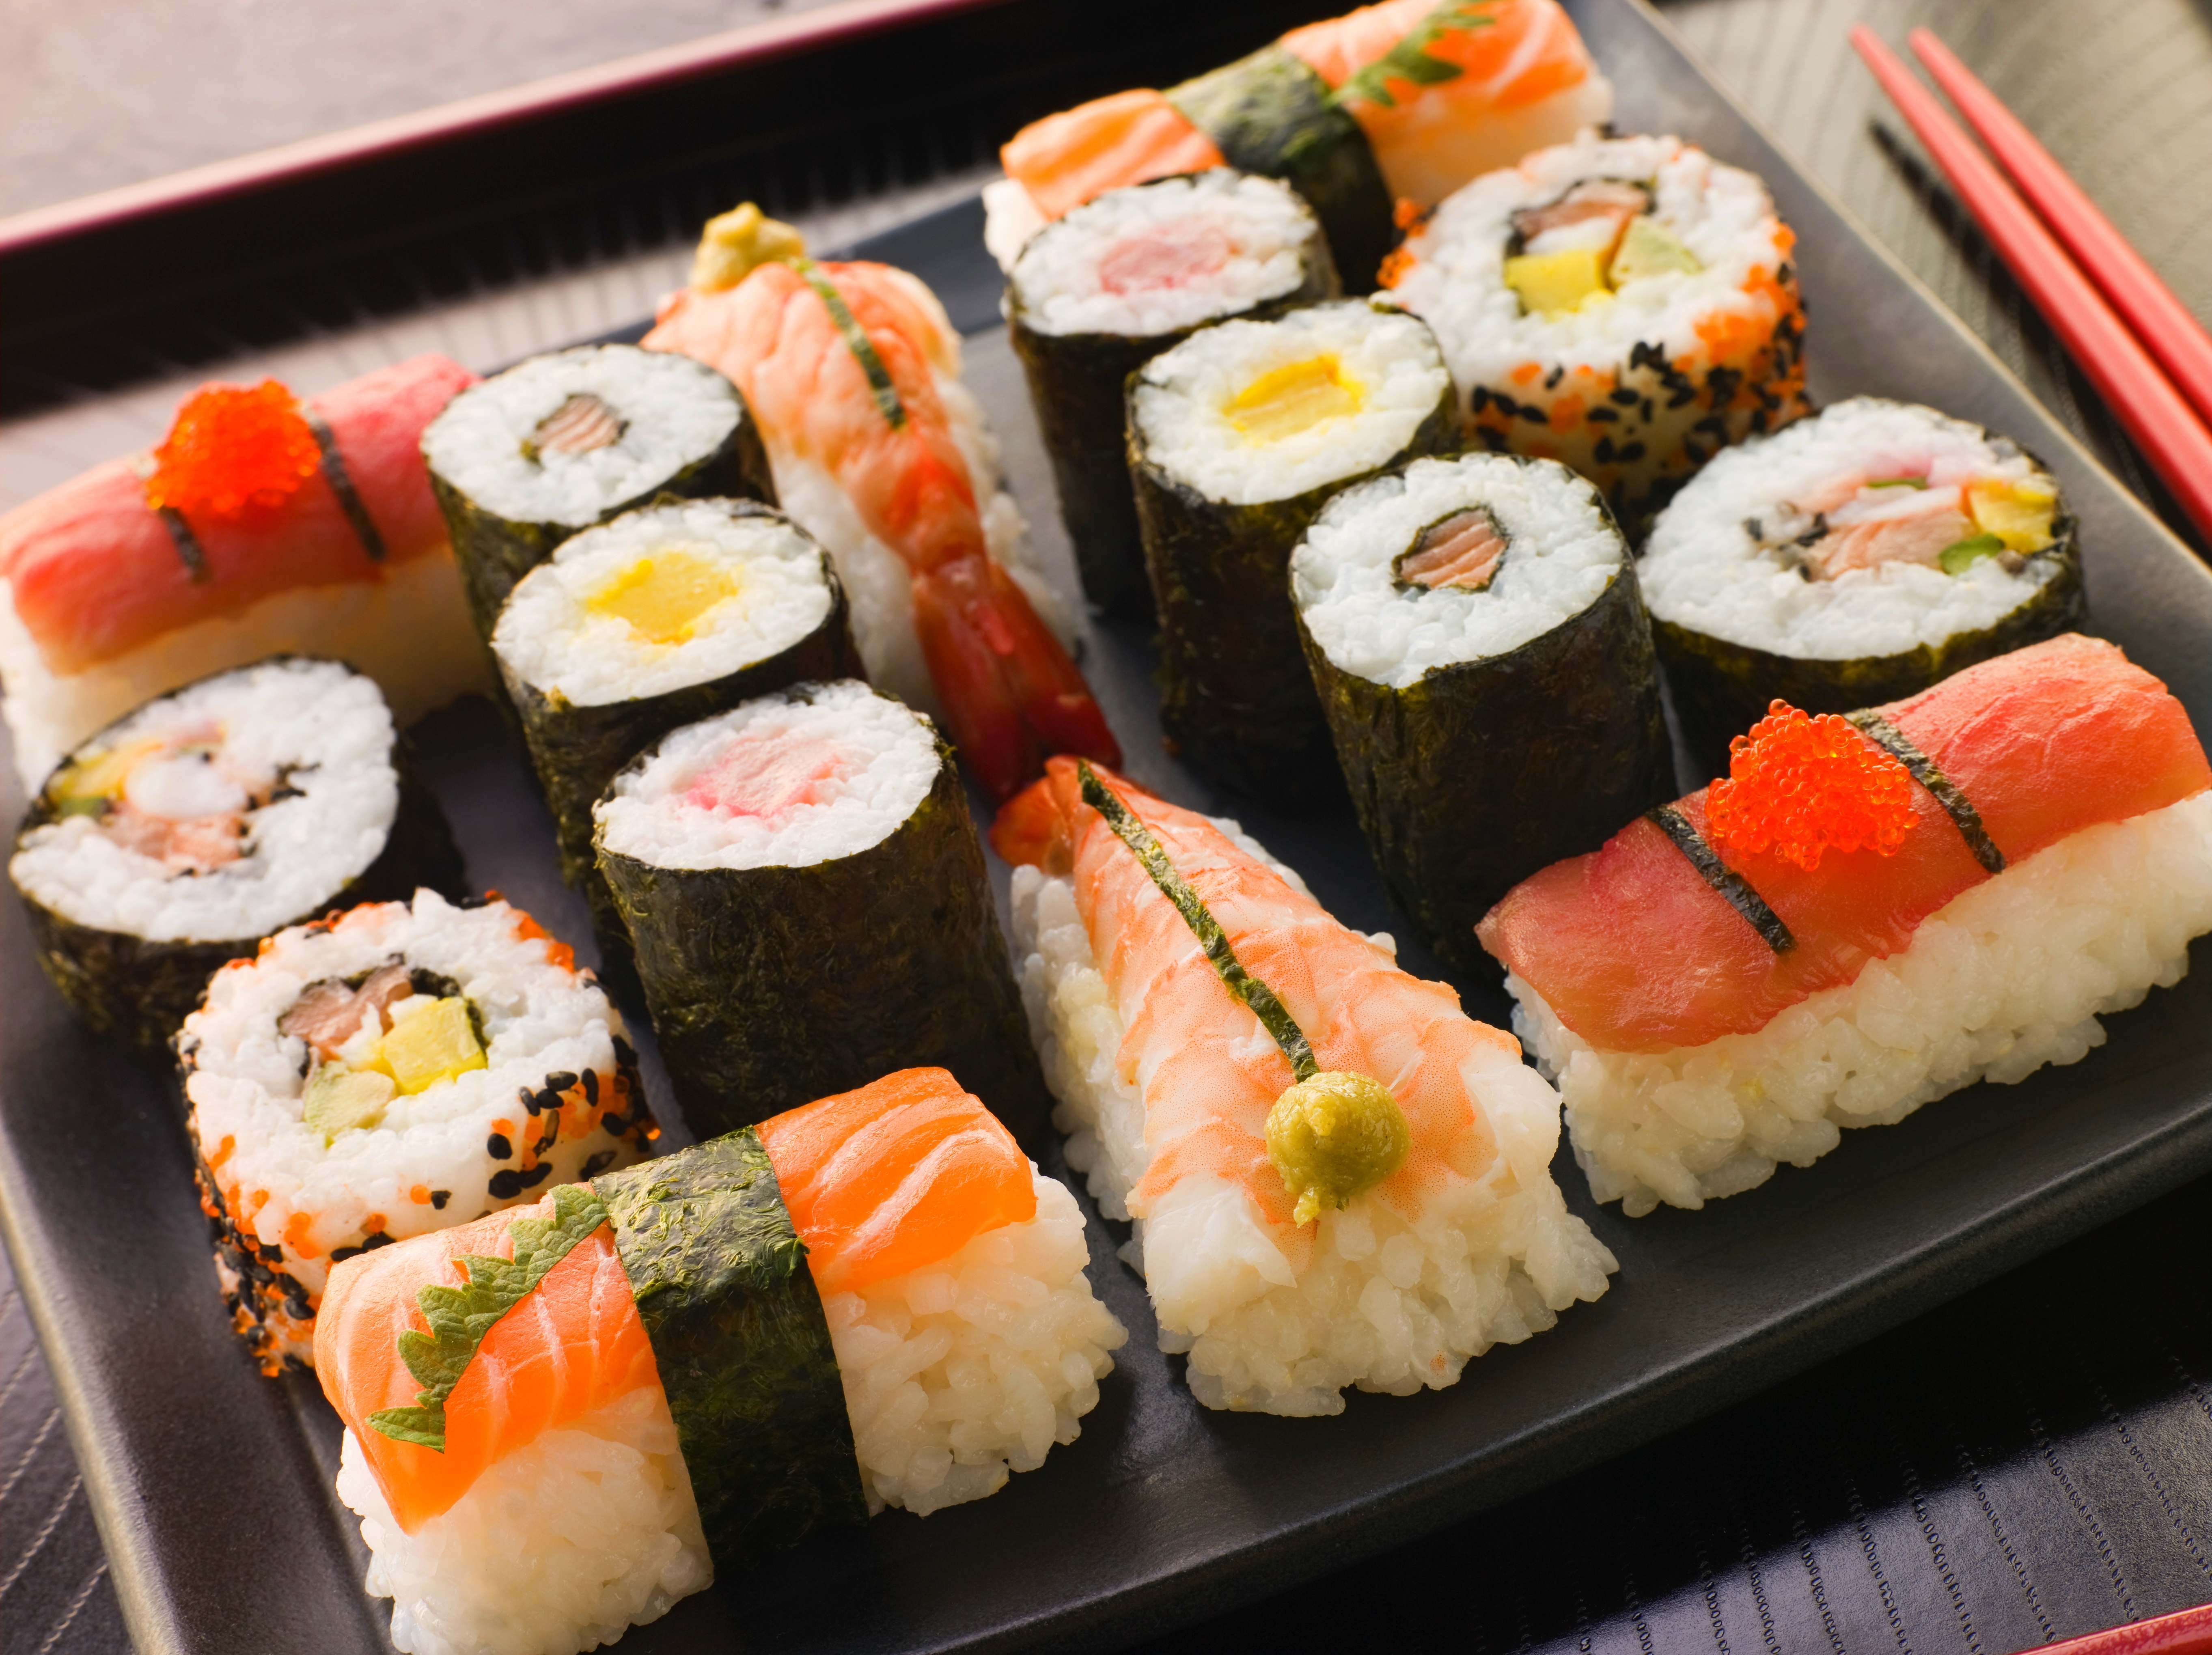 Суши хвойная. Суши роллы японская кухня. Настоящие японские суши в Японии. Роллы в Японии. Японская еда суши.